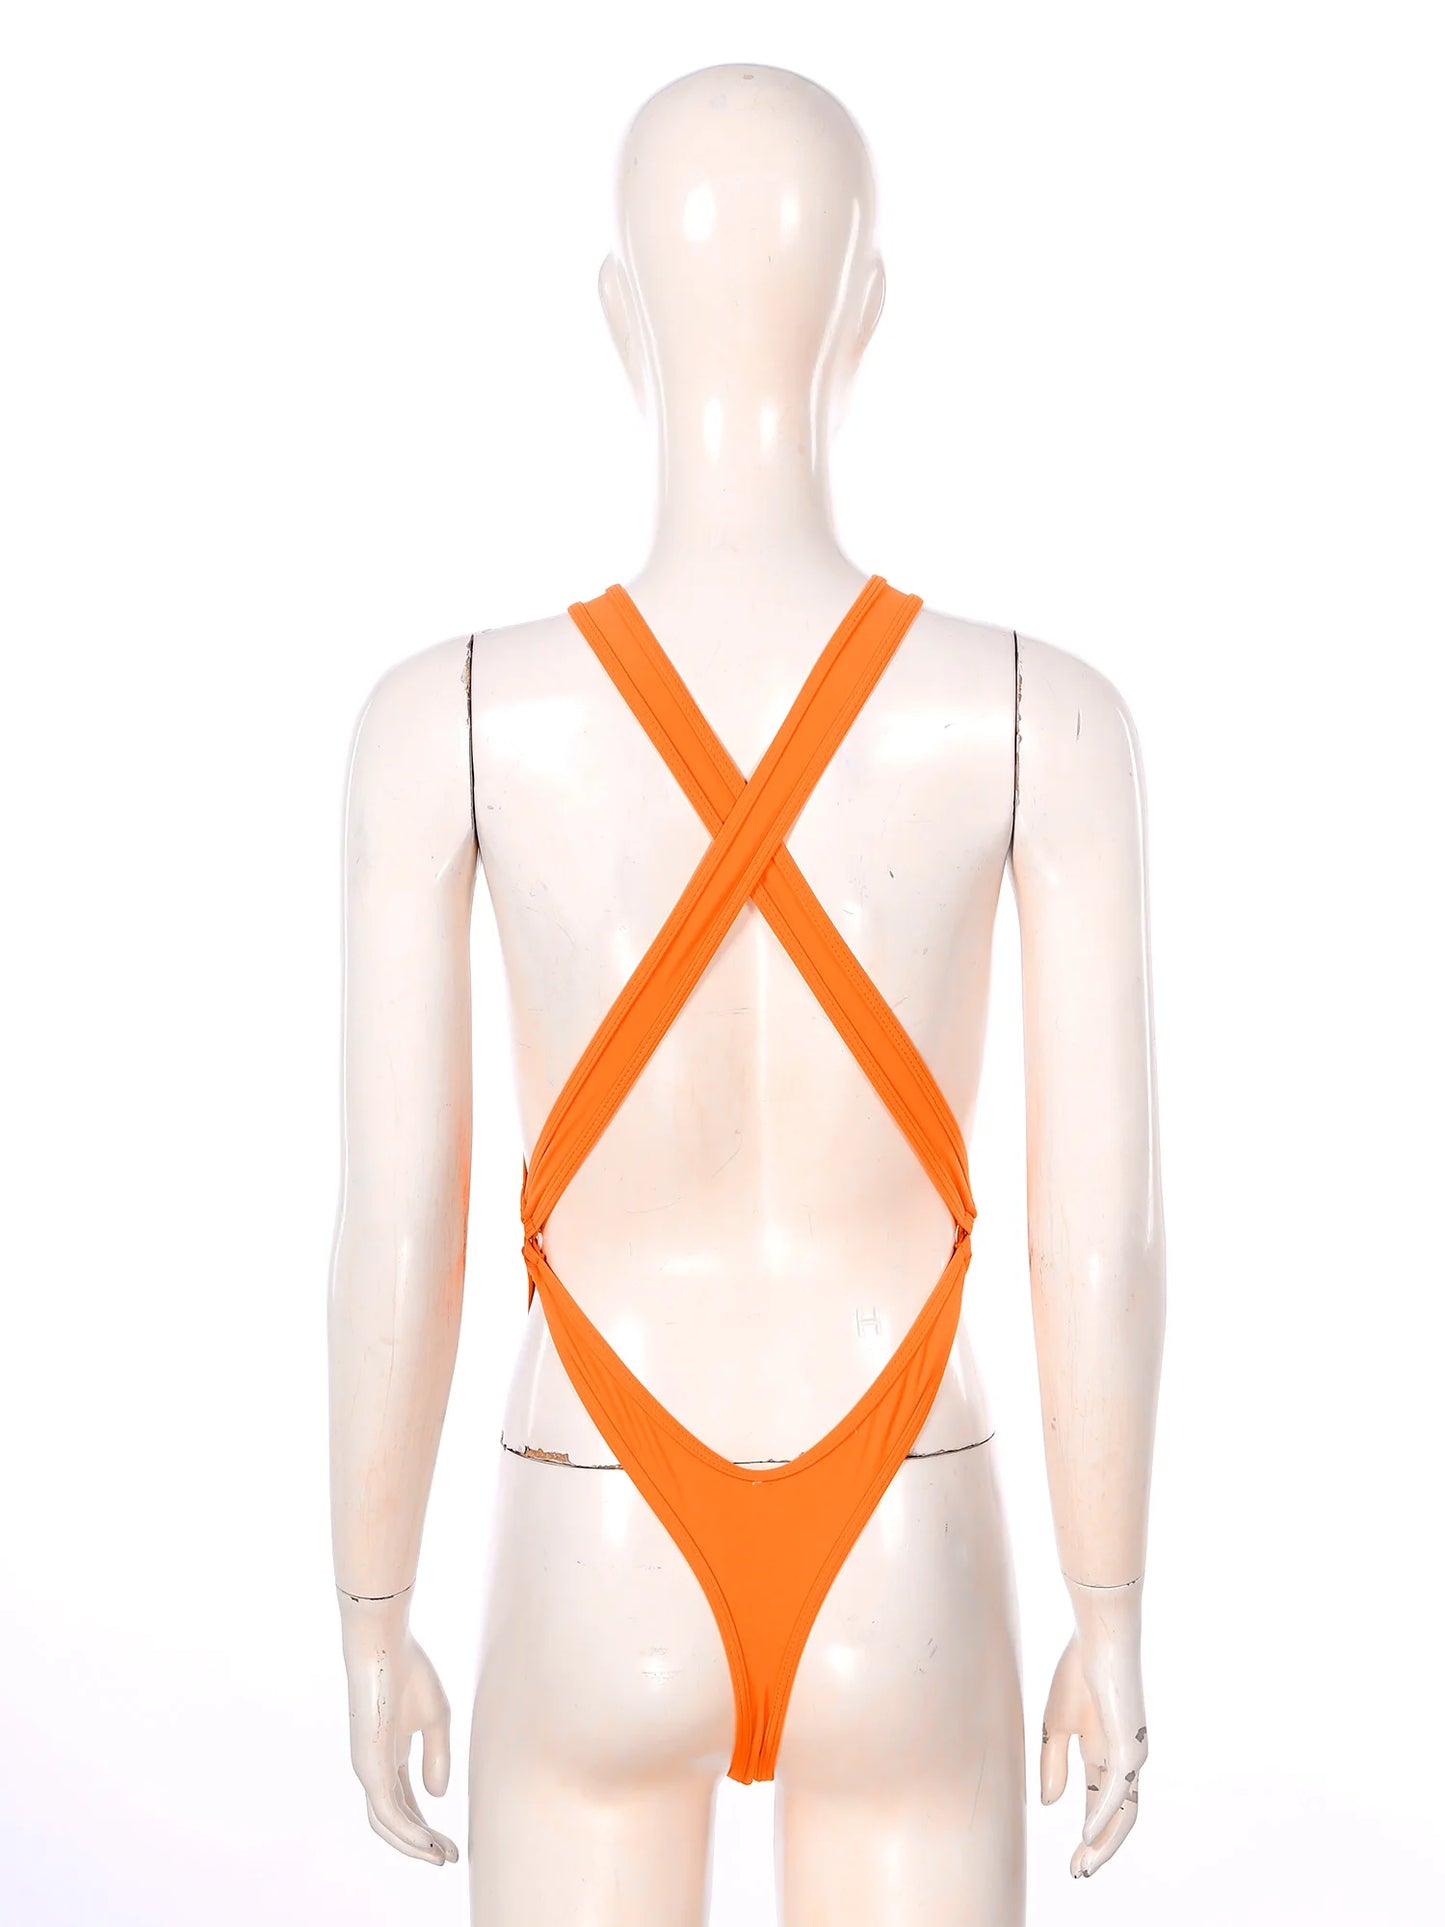 One Piece Womens Bodysuit High Cut Tight Monokini Summer Swimsuit Party Romper Swimwear